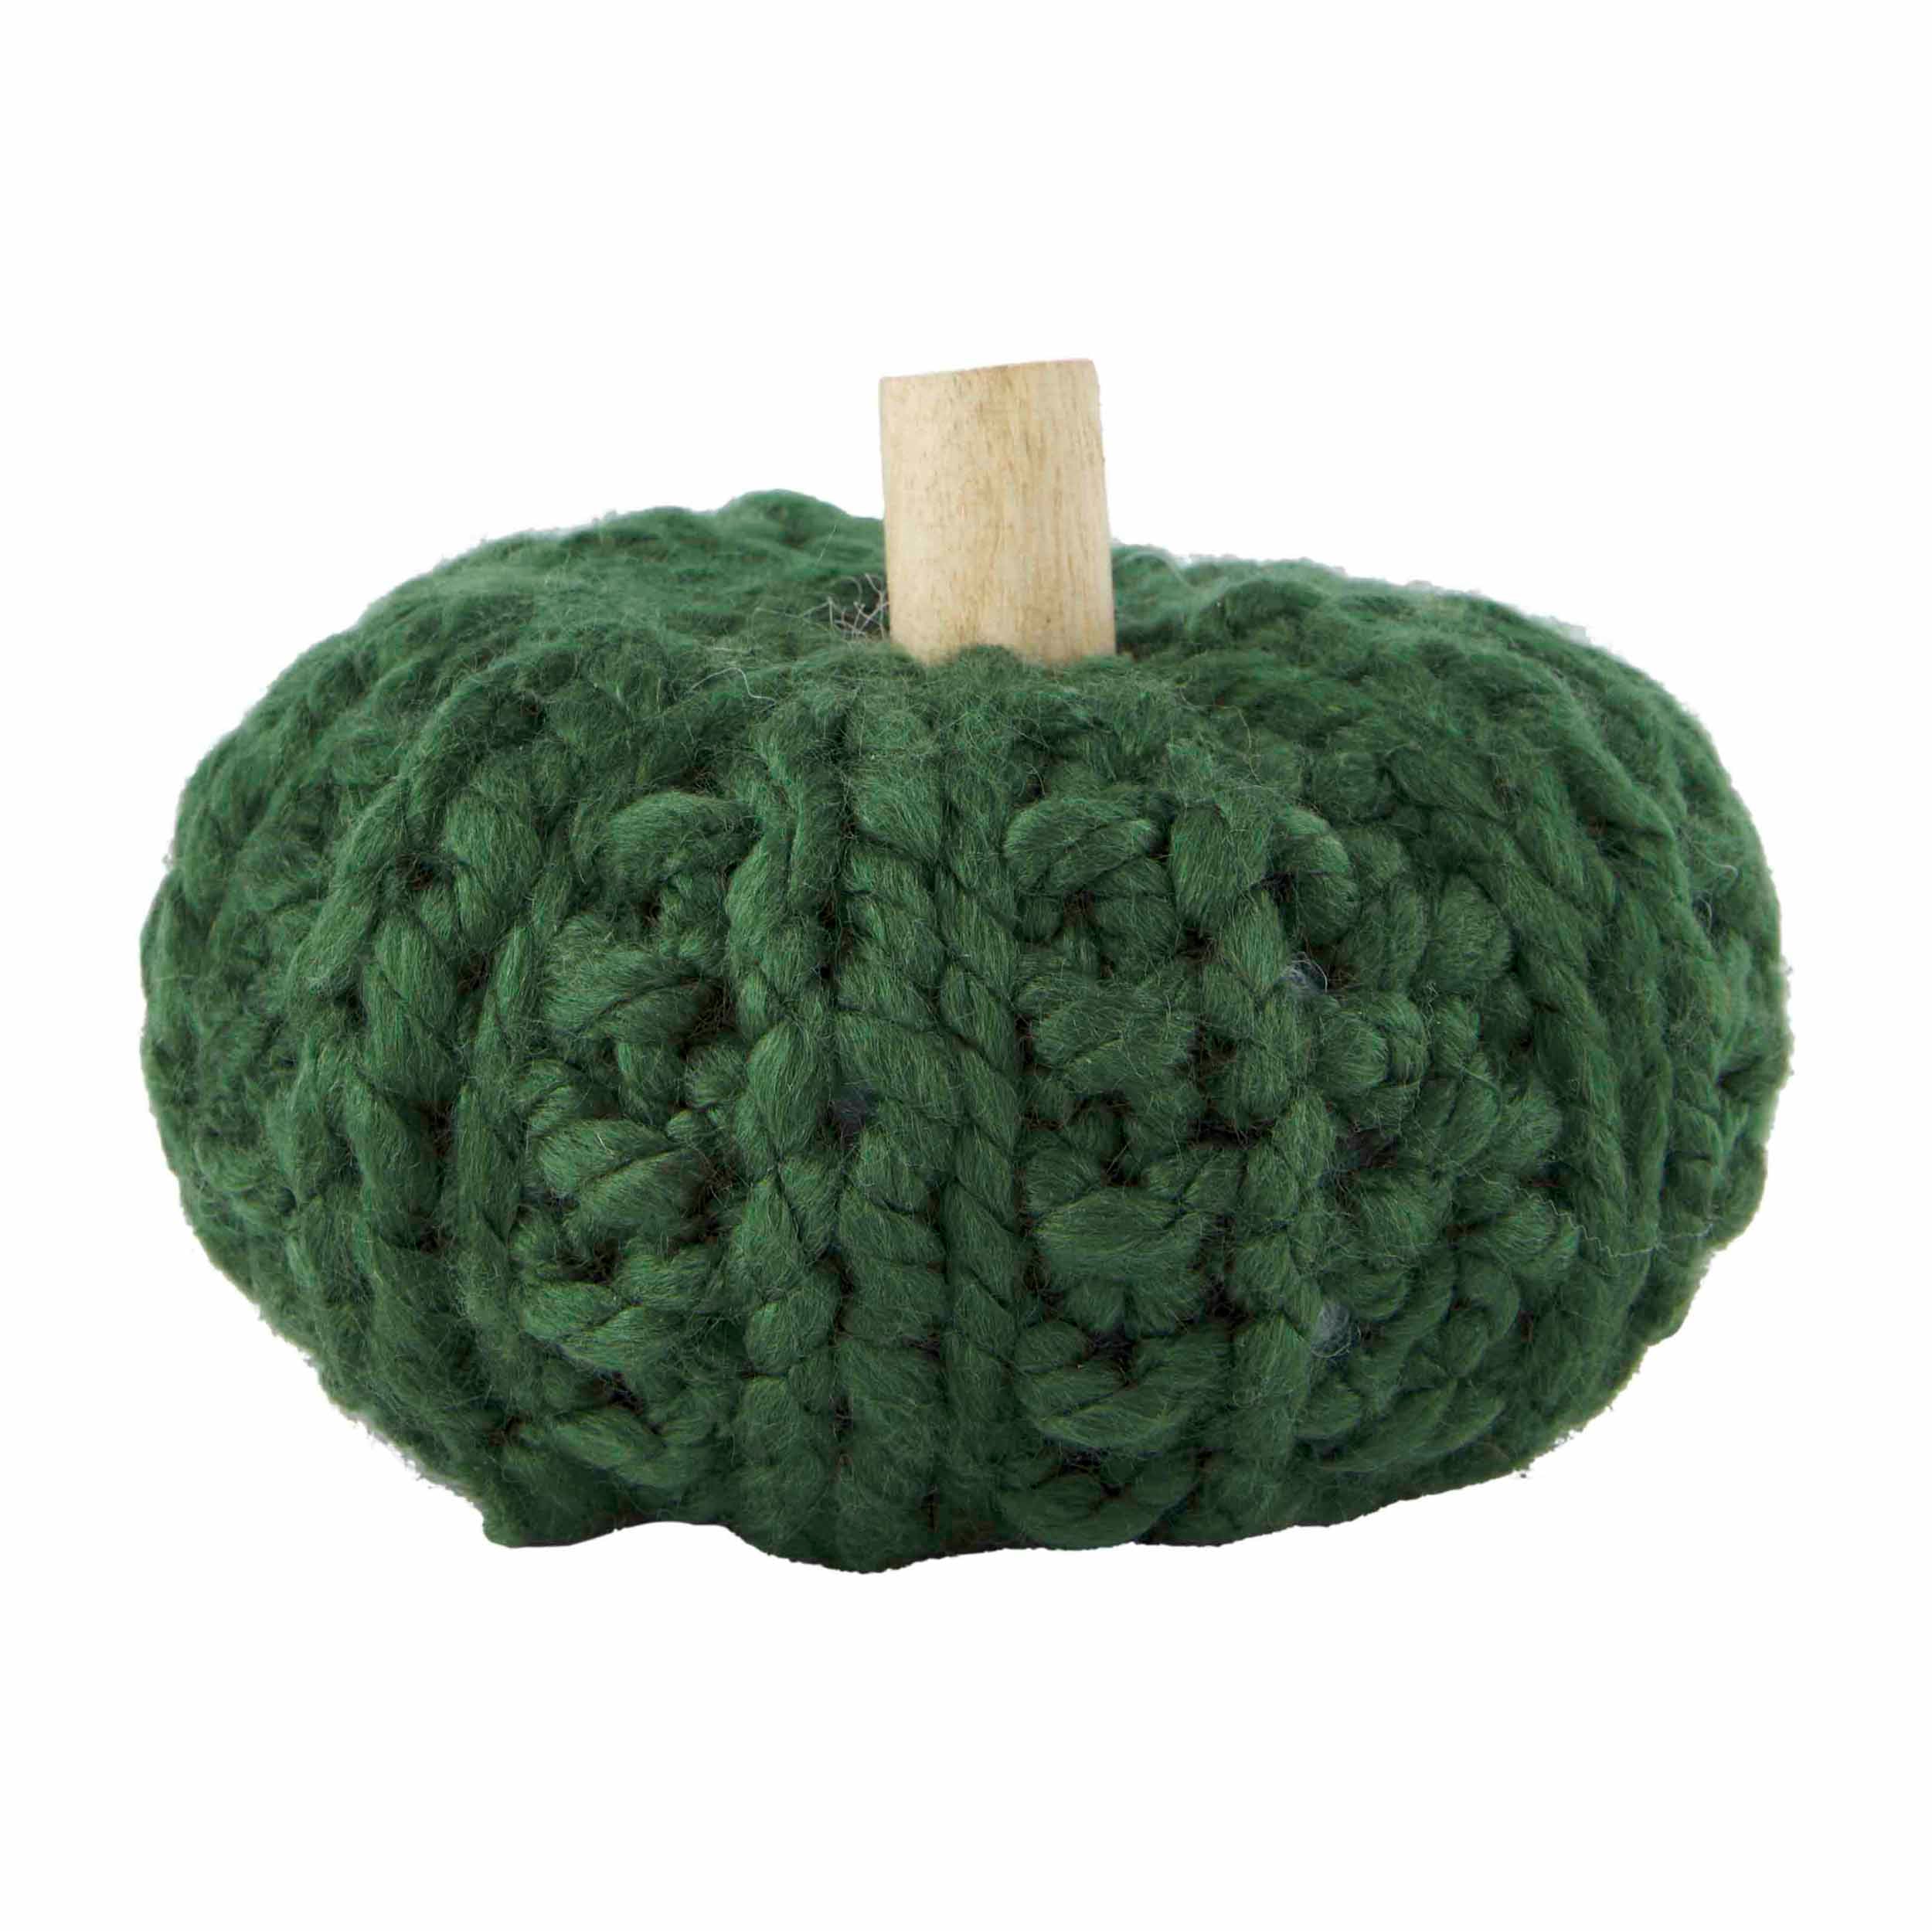 Mudpie Crochet Pumpkins